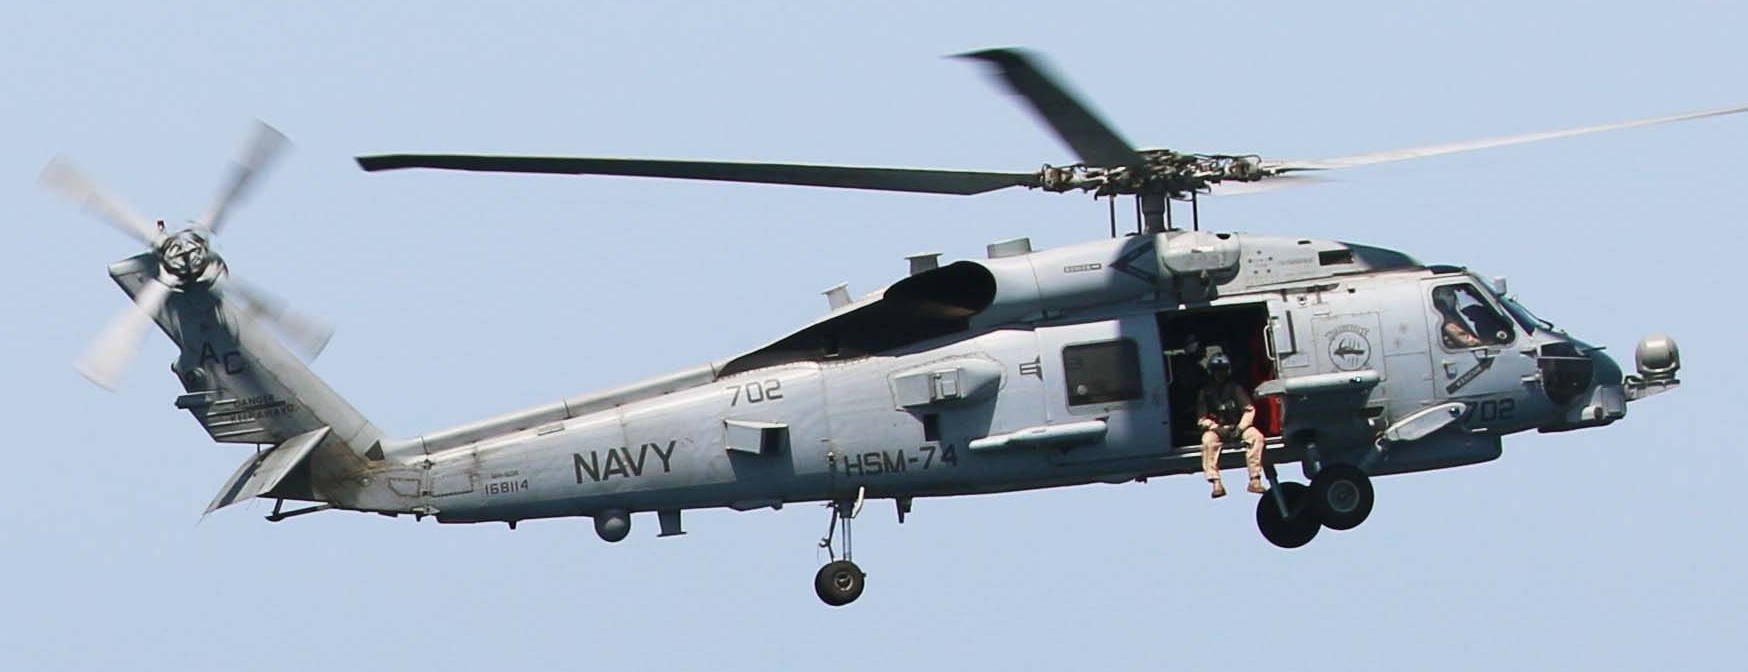 hsm-74 swamp foxes helicopter maritime strike squadron mh-60r seahawk cvw-3 cvn-69 uss dwight d. eisenhower 11